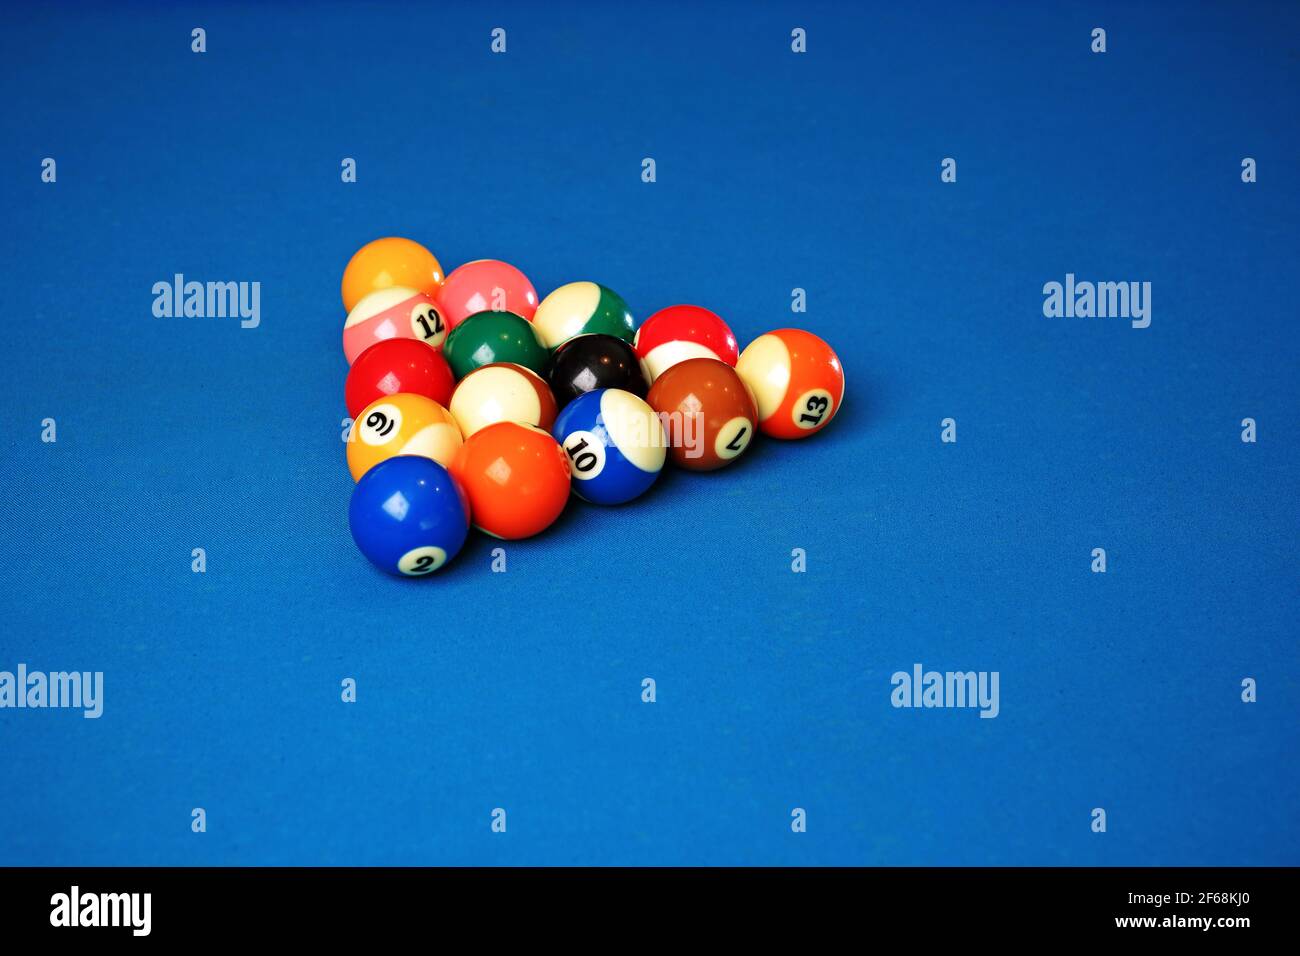 billiard balls on a blue background Stock Photo